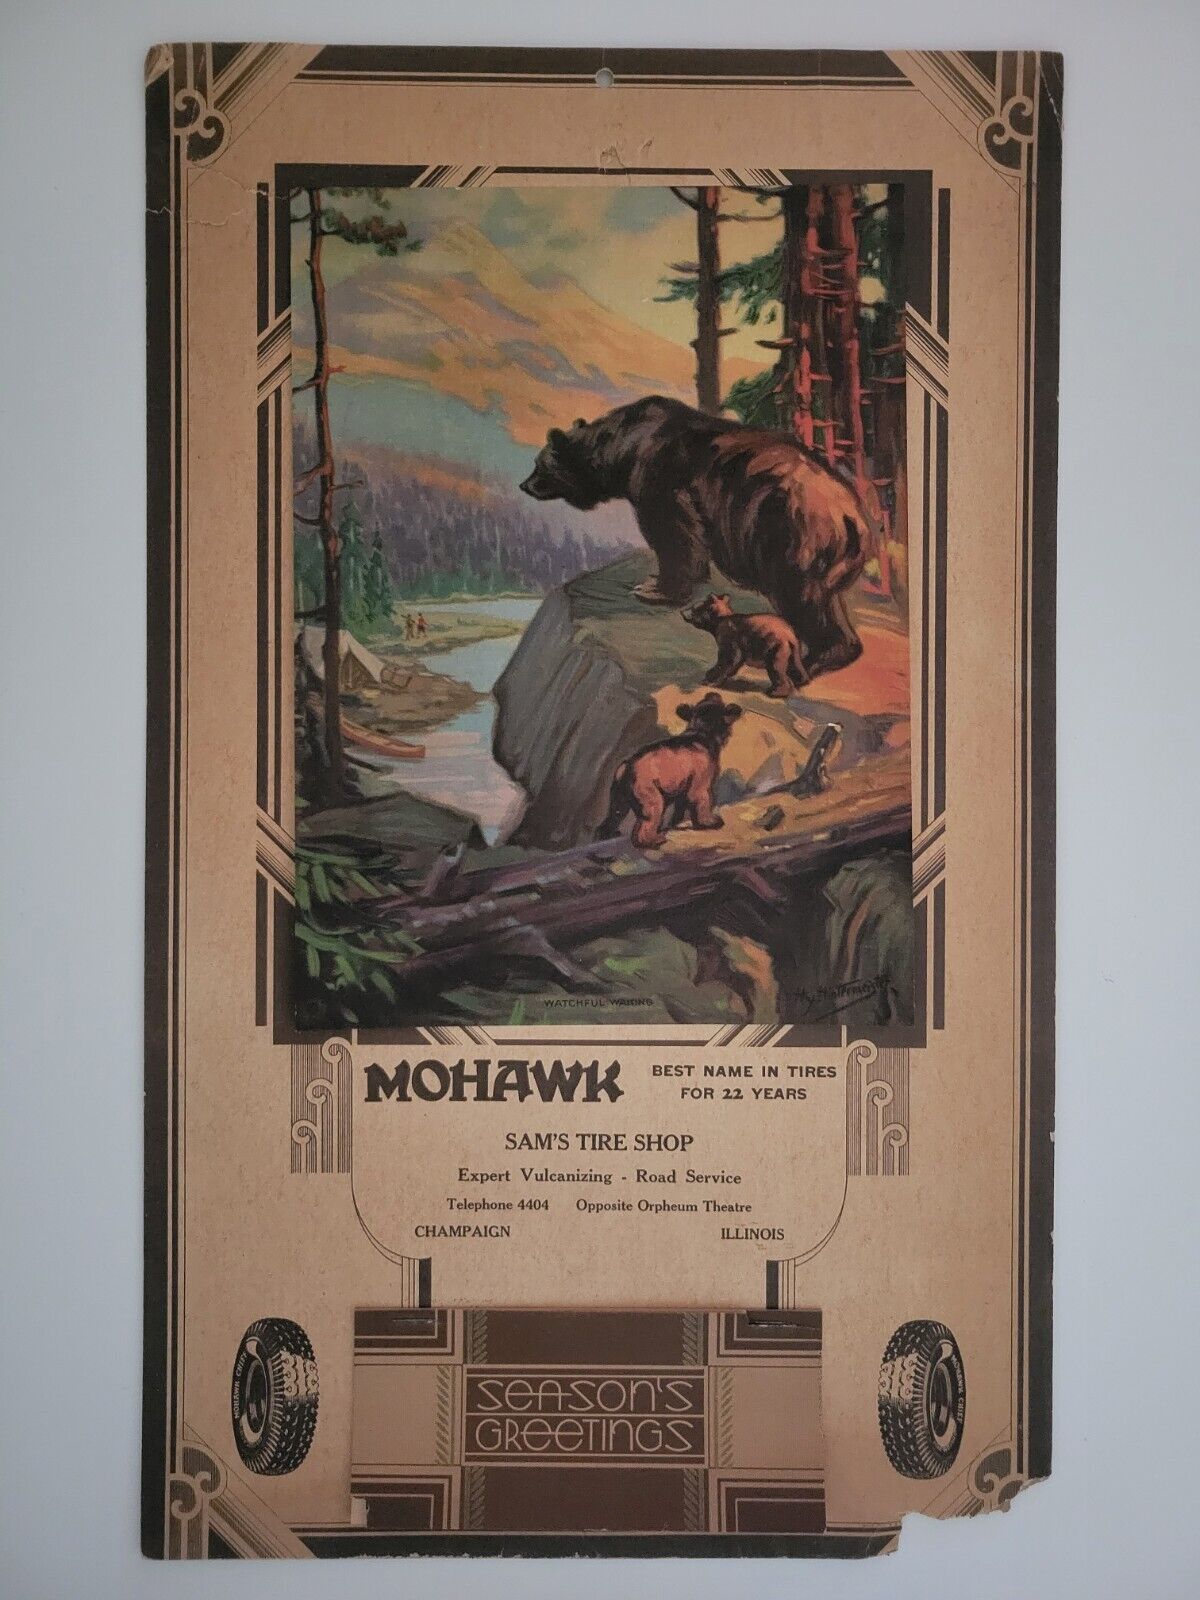 VTG 1935 MOHAWK TIRES ADVERTISING CALENDAR 16x11 SIGN BEARS CUB LITHO PRINT RARE